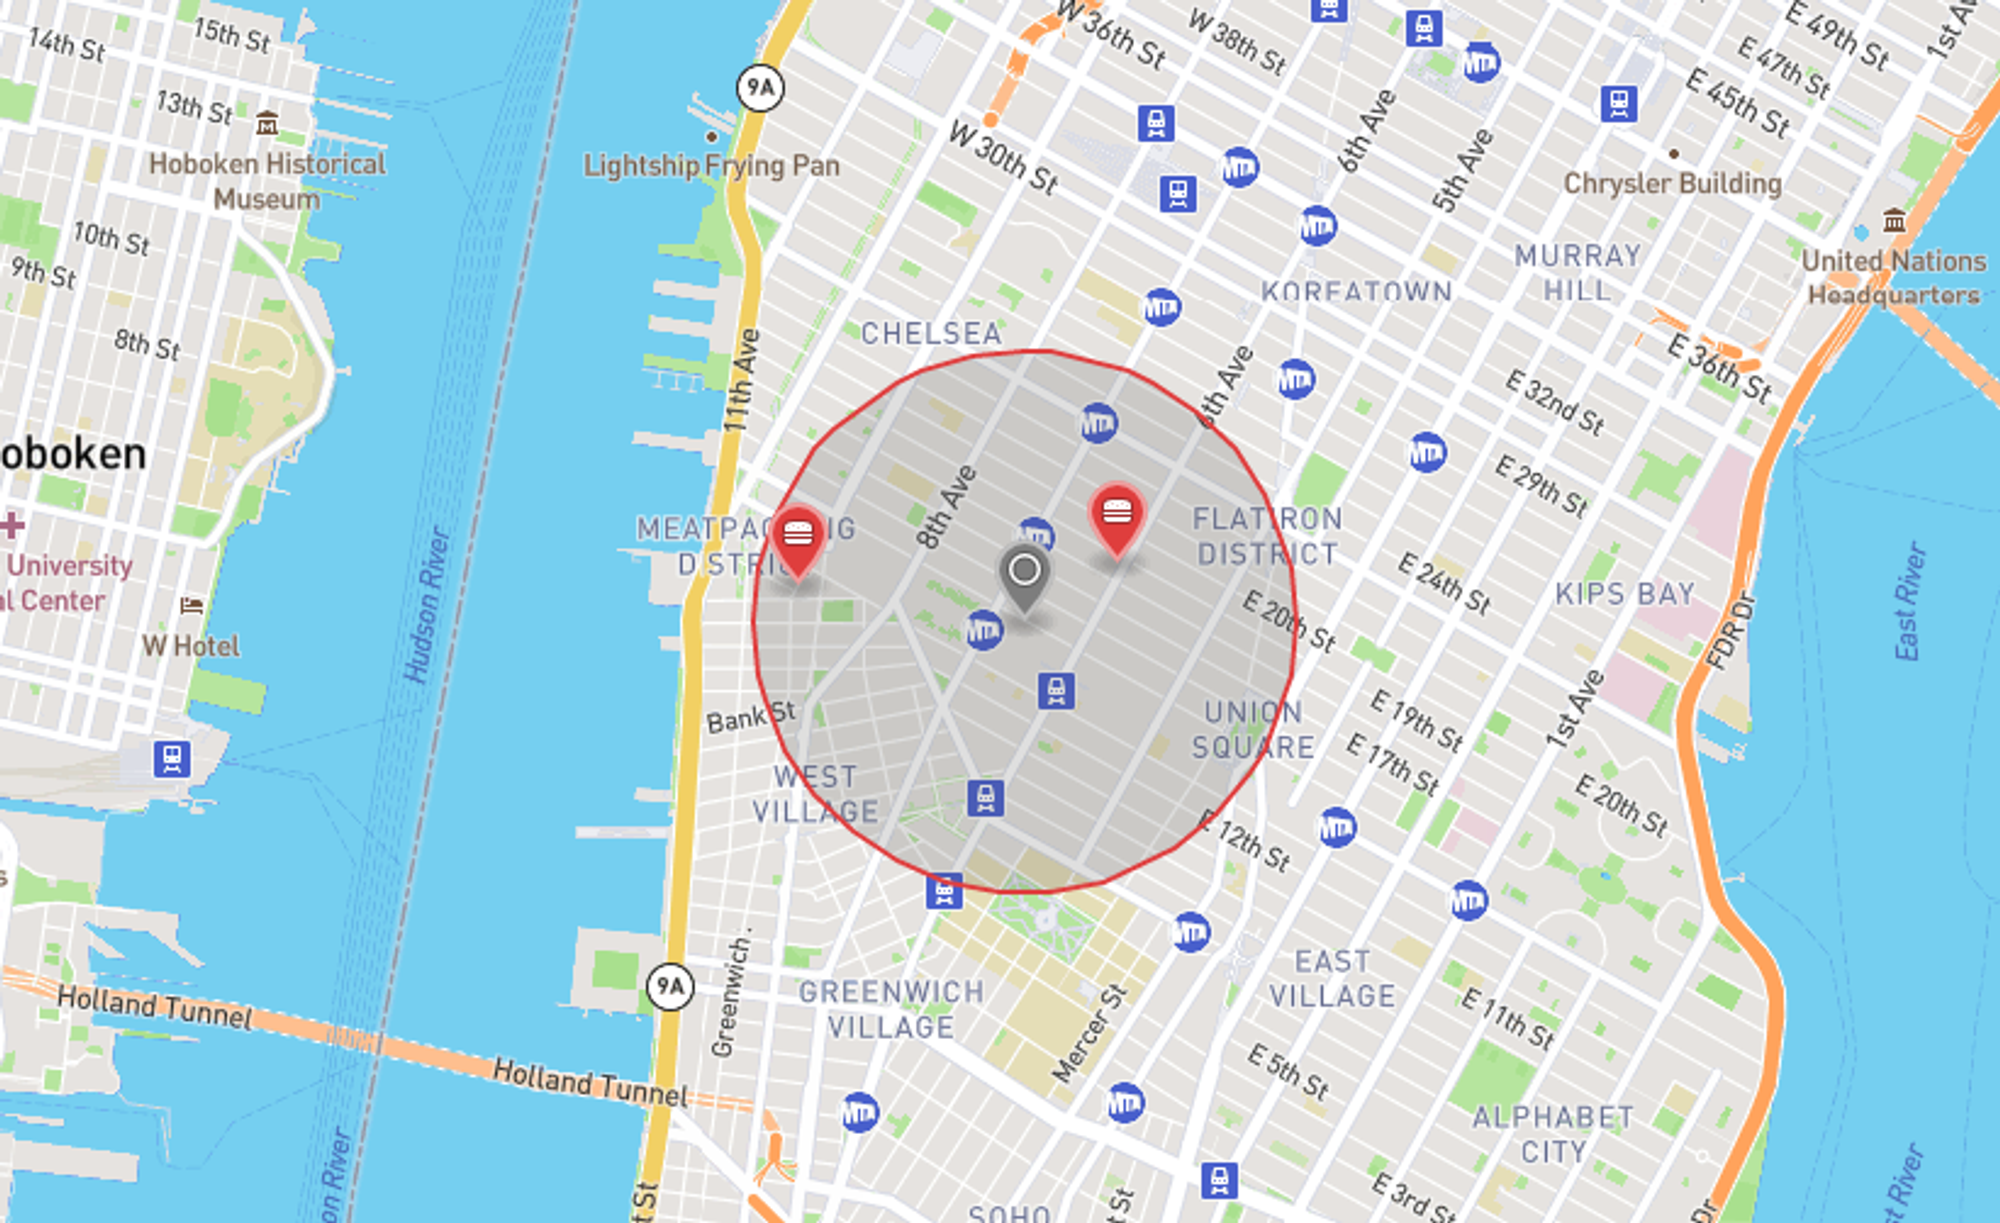 Imaginary Restaurants in Midtown Manhattan. Map courtesy of http://geojson.io/